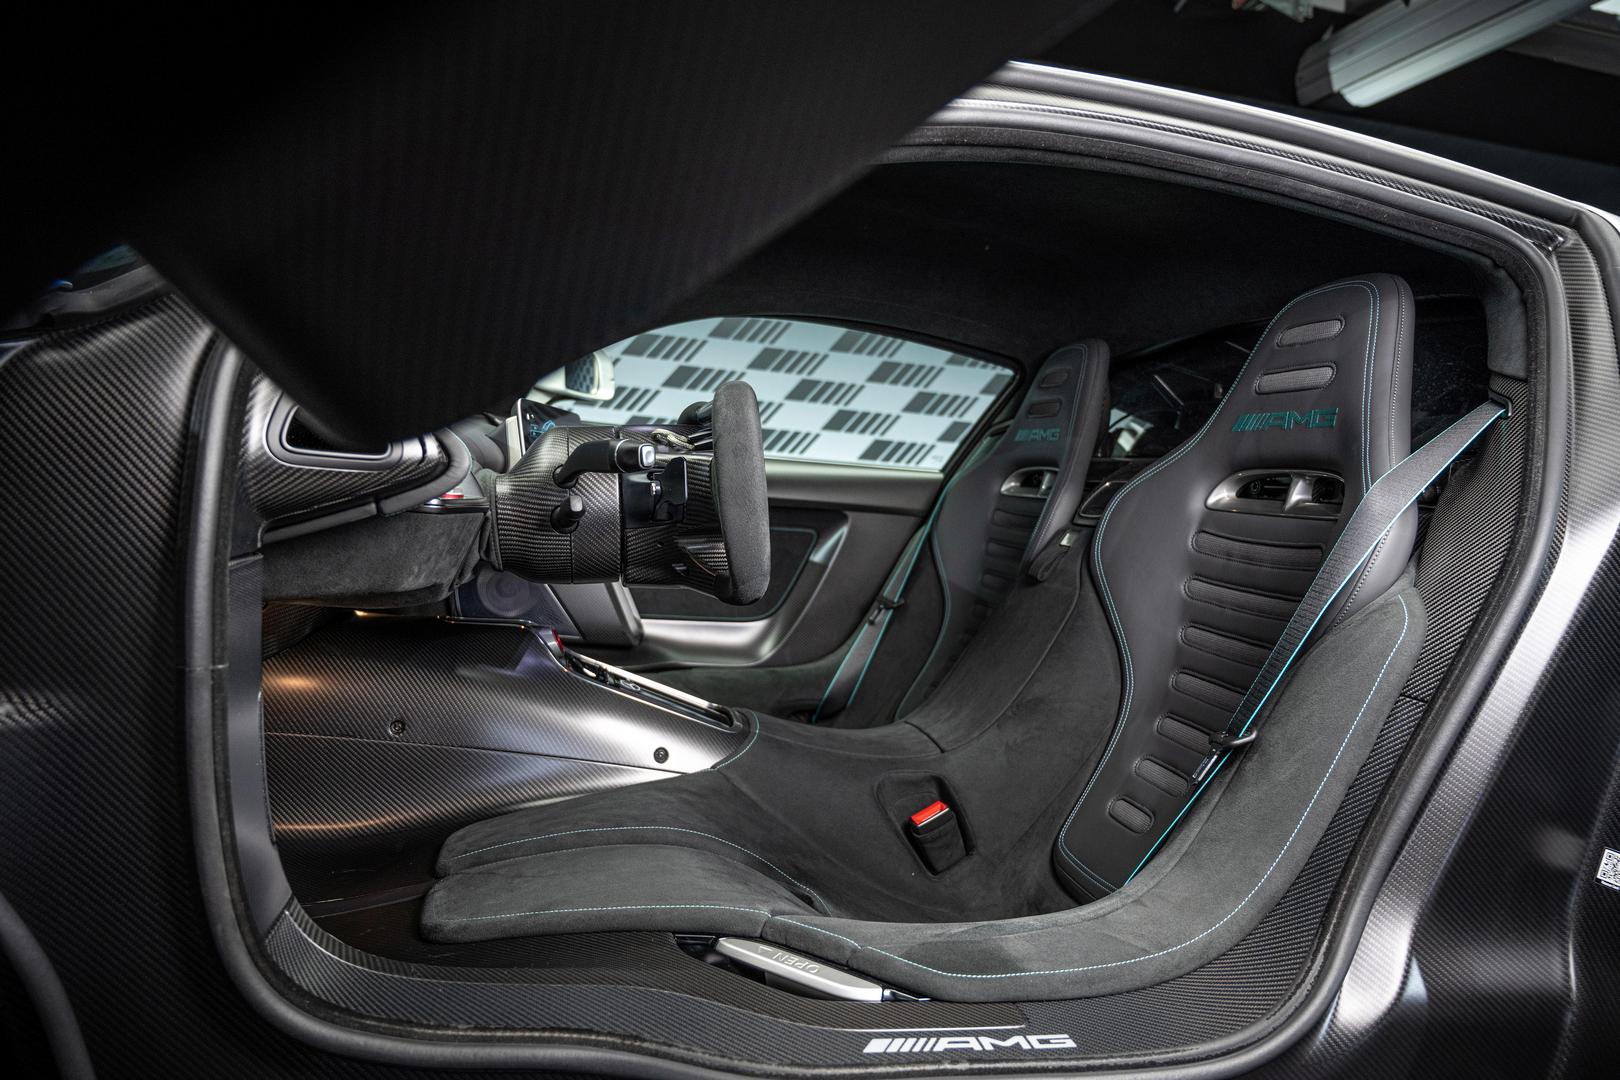 Mercedes-AMG ONE seats